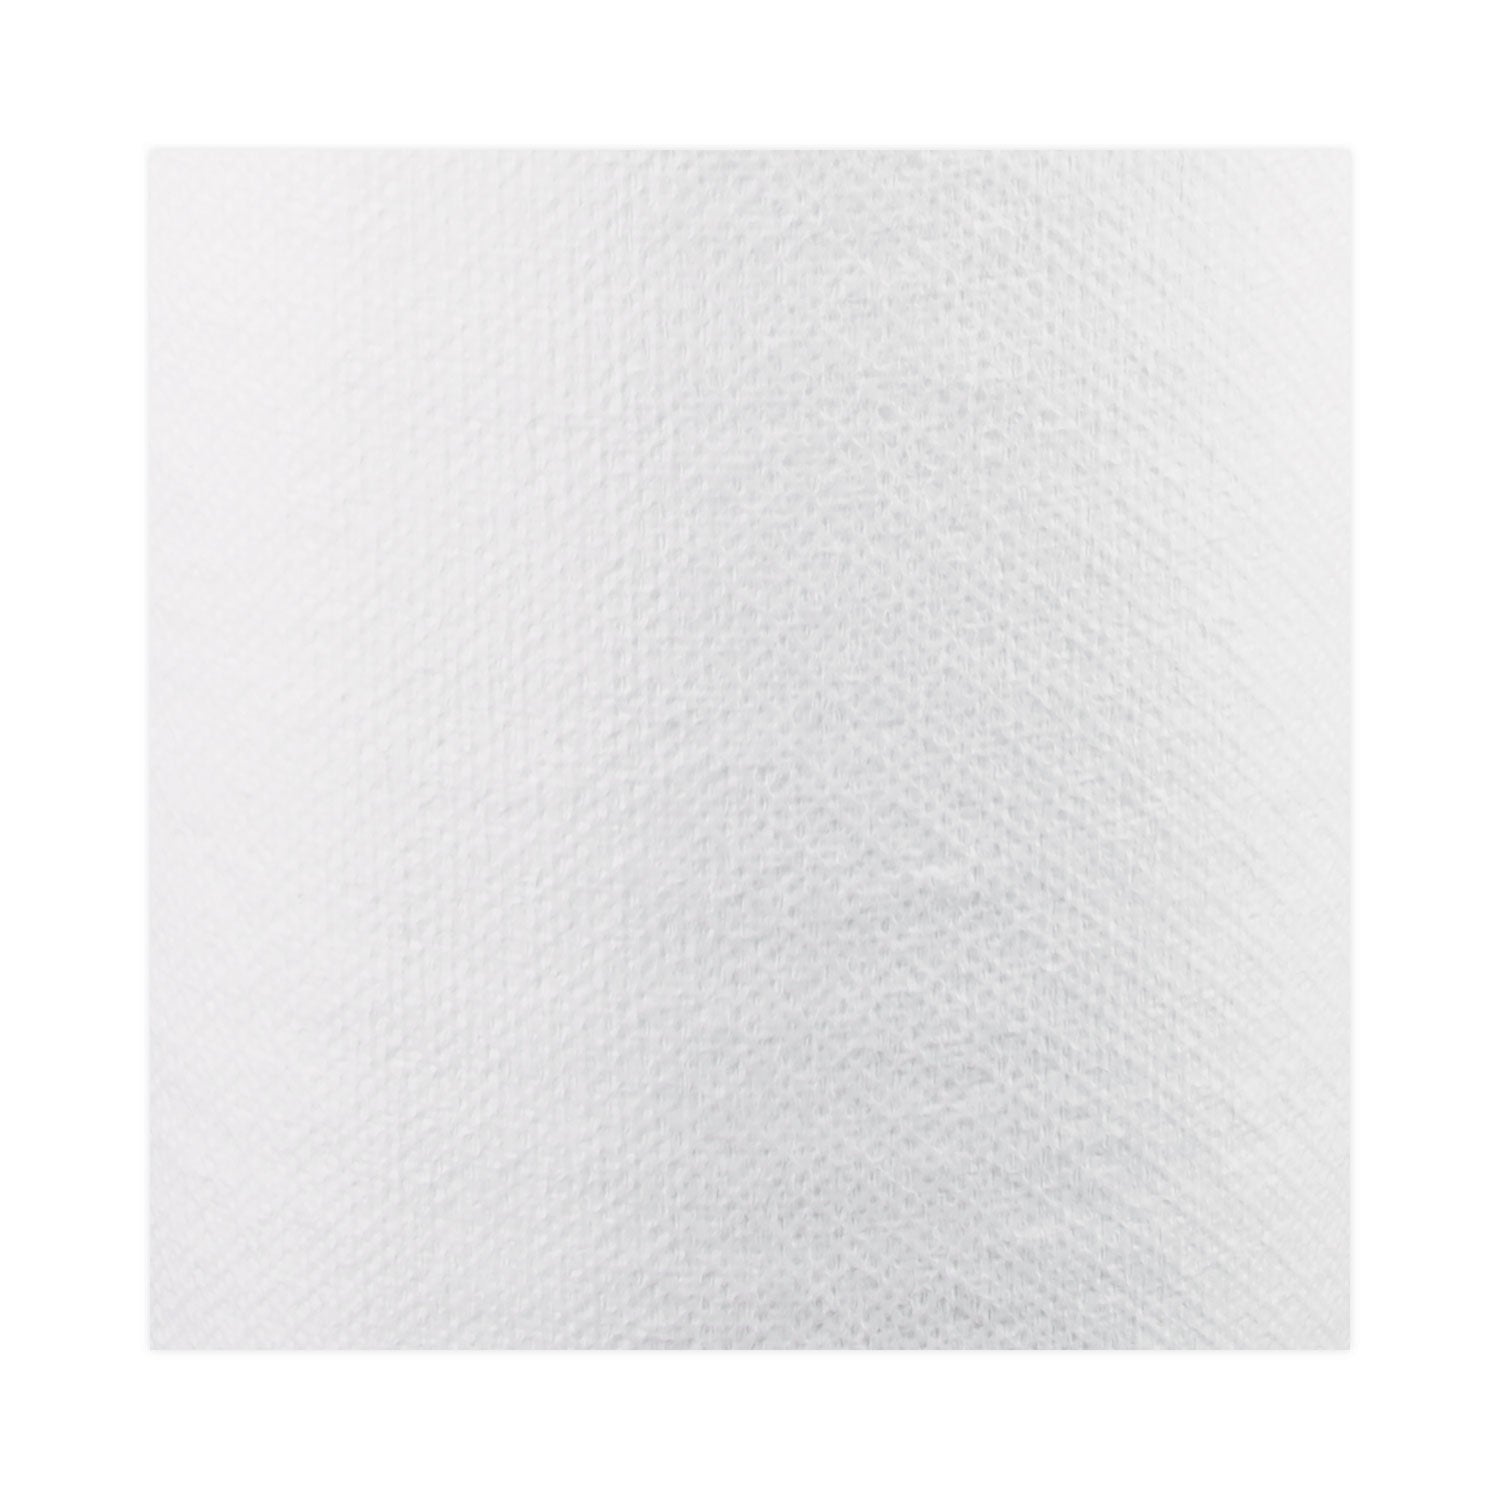 hardwound-roll-towels-1-ply-8-x-350-ft-white-12-rolls-carton_win109b - 3